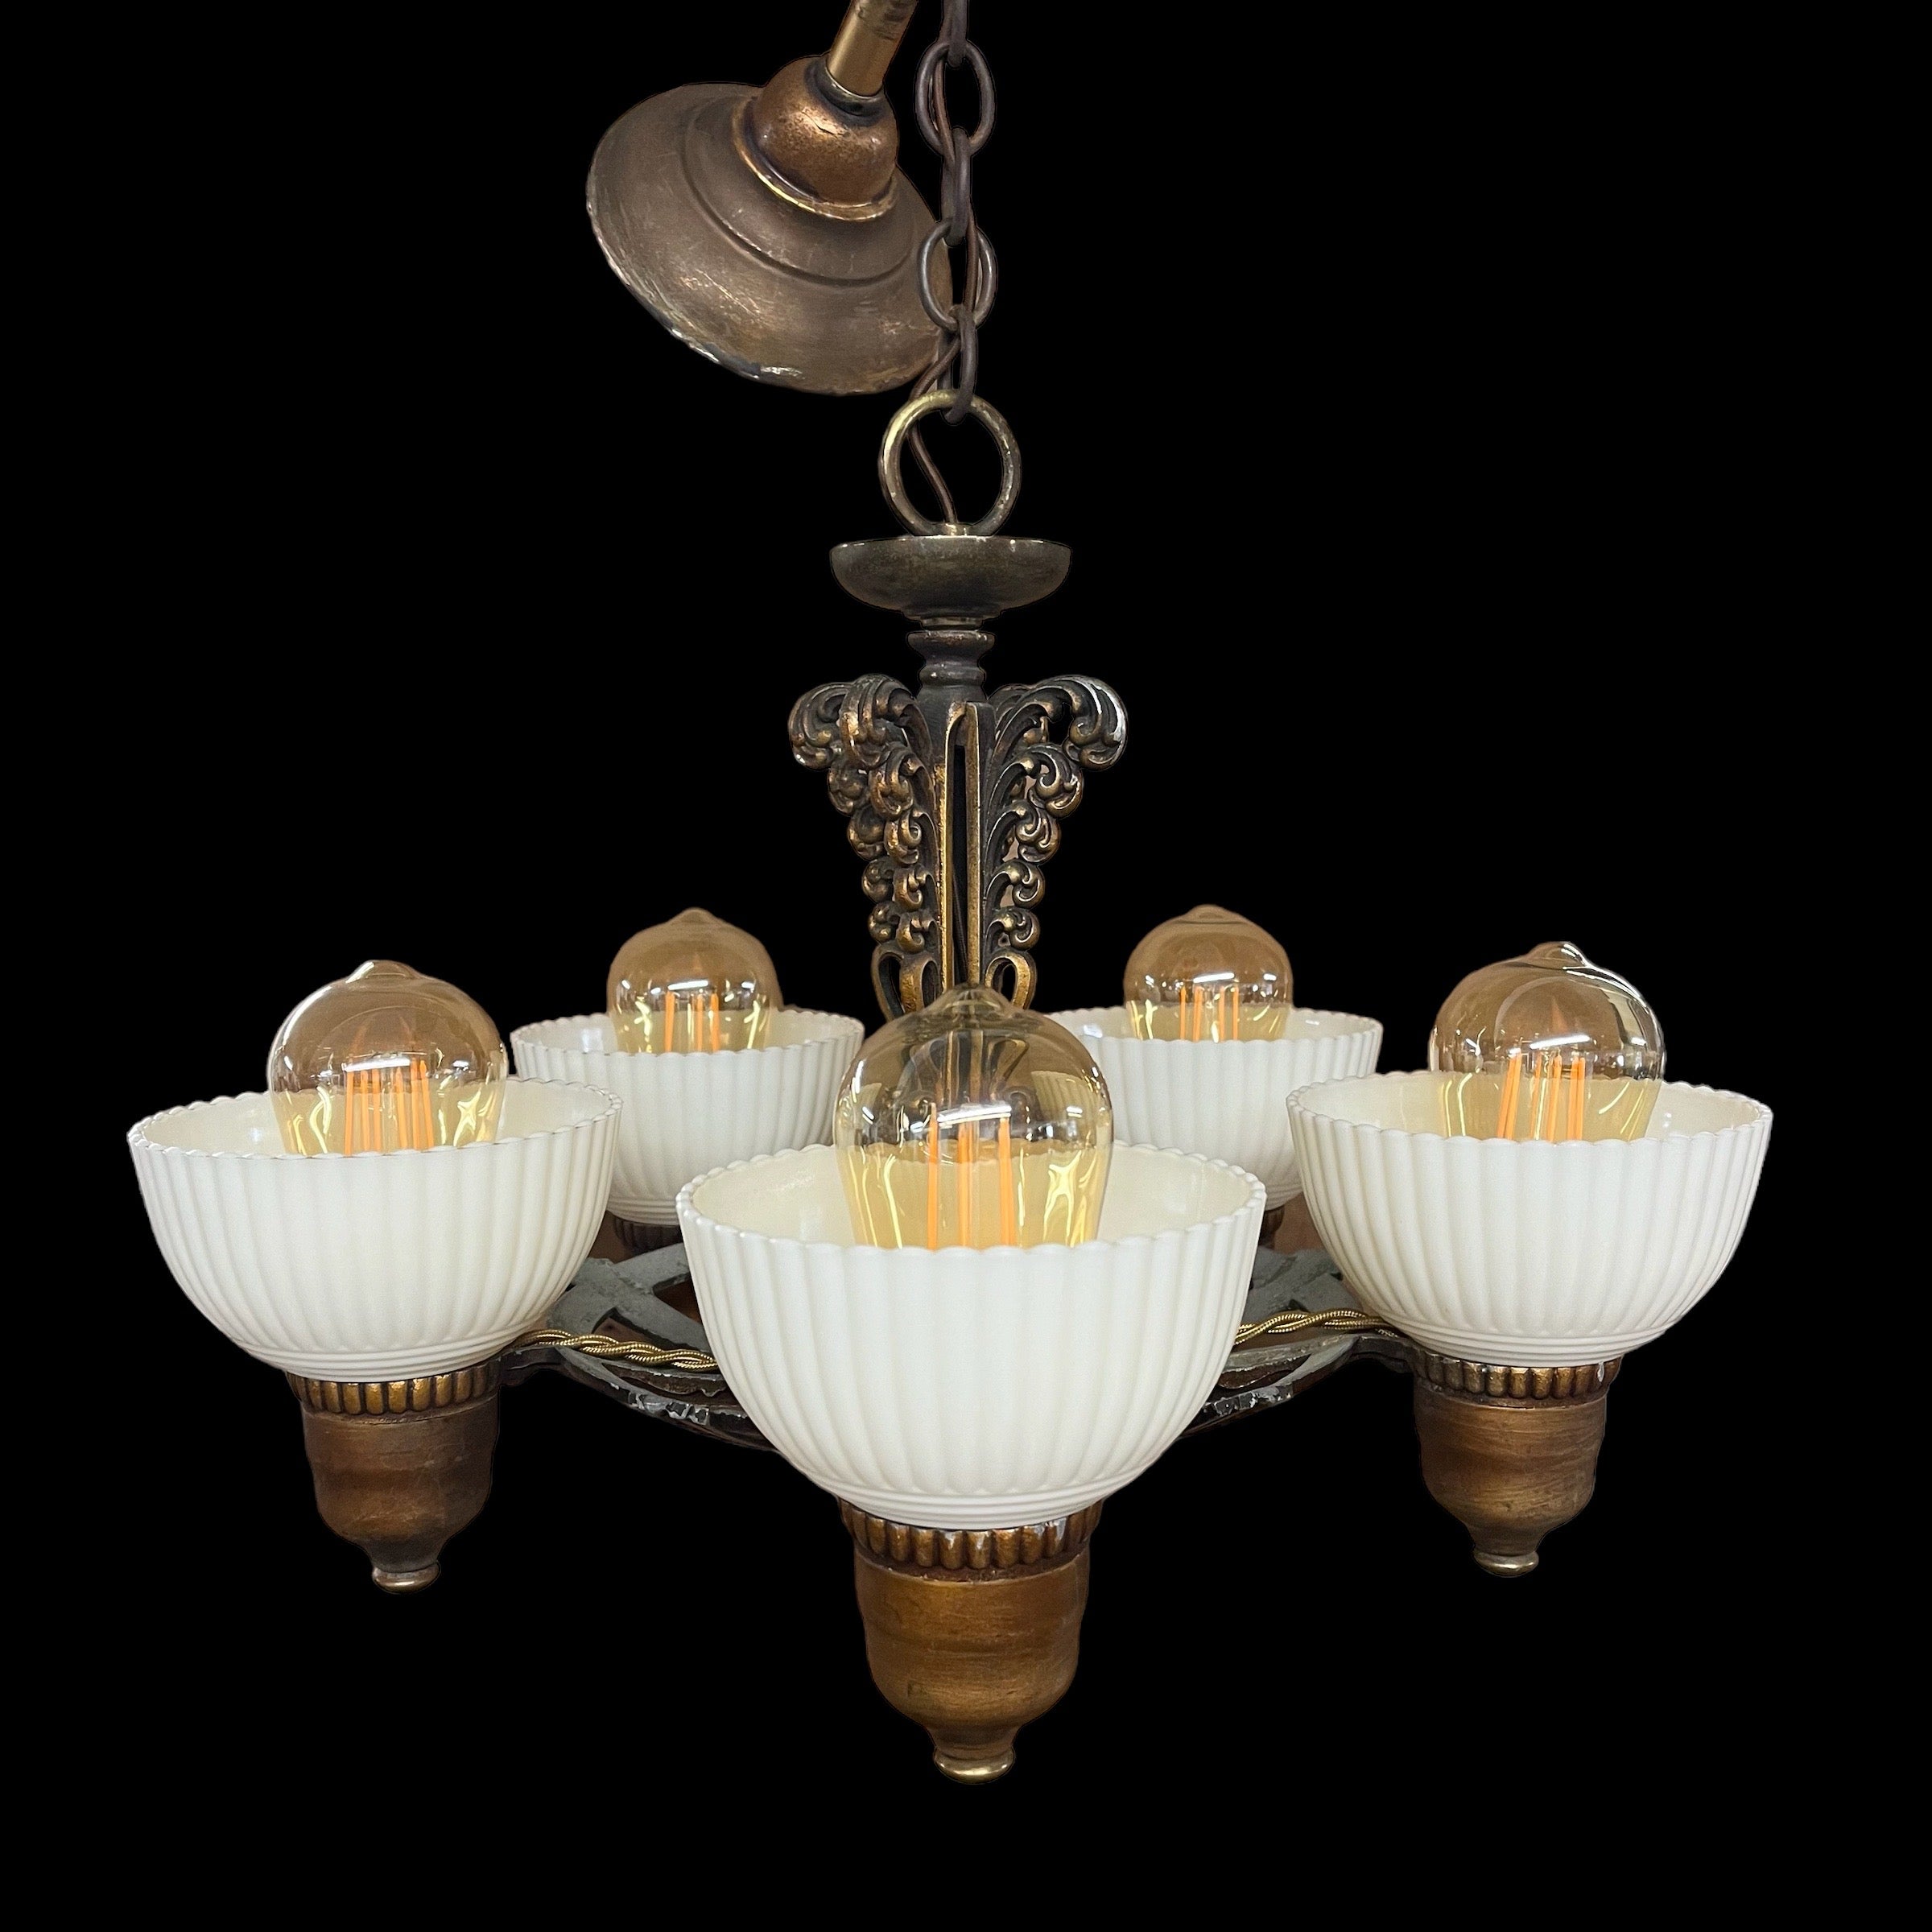 Antique Art Nouveau 5 Bulb Hanging Light/Chandelier With Glass Shades